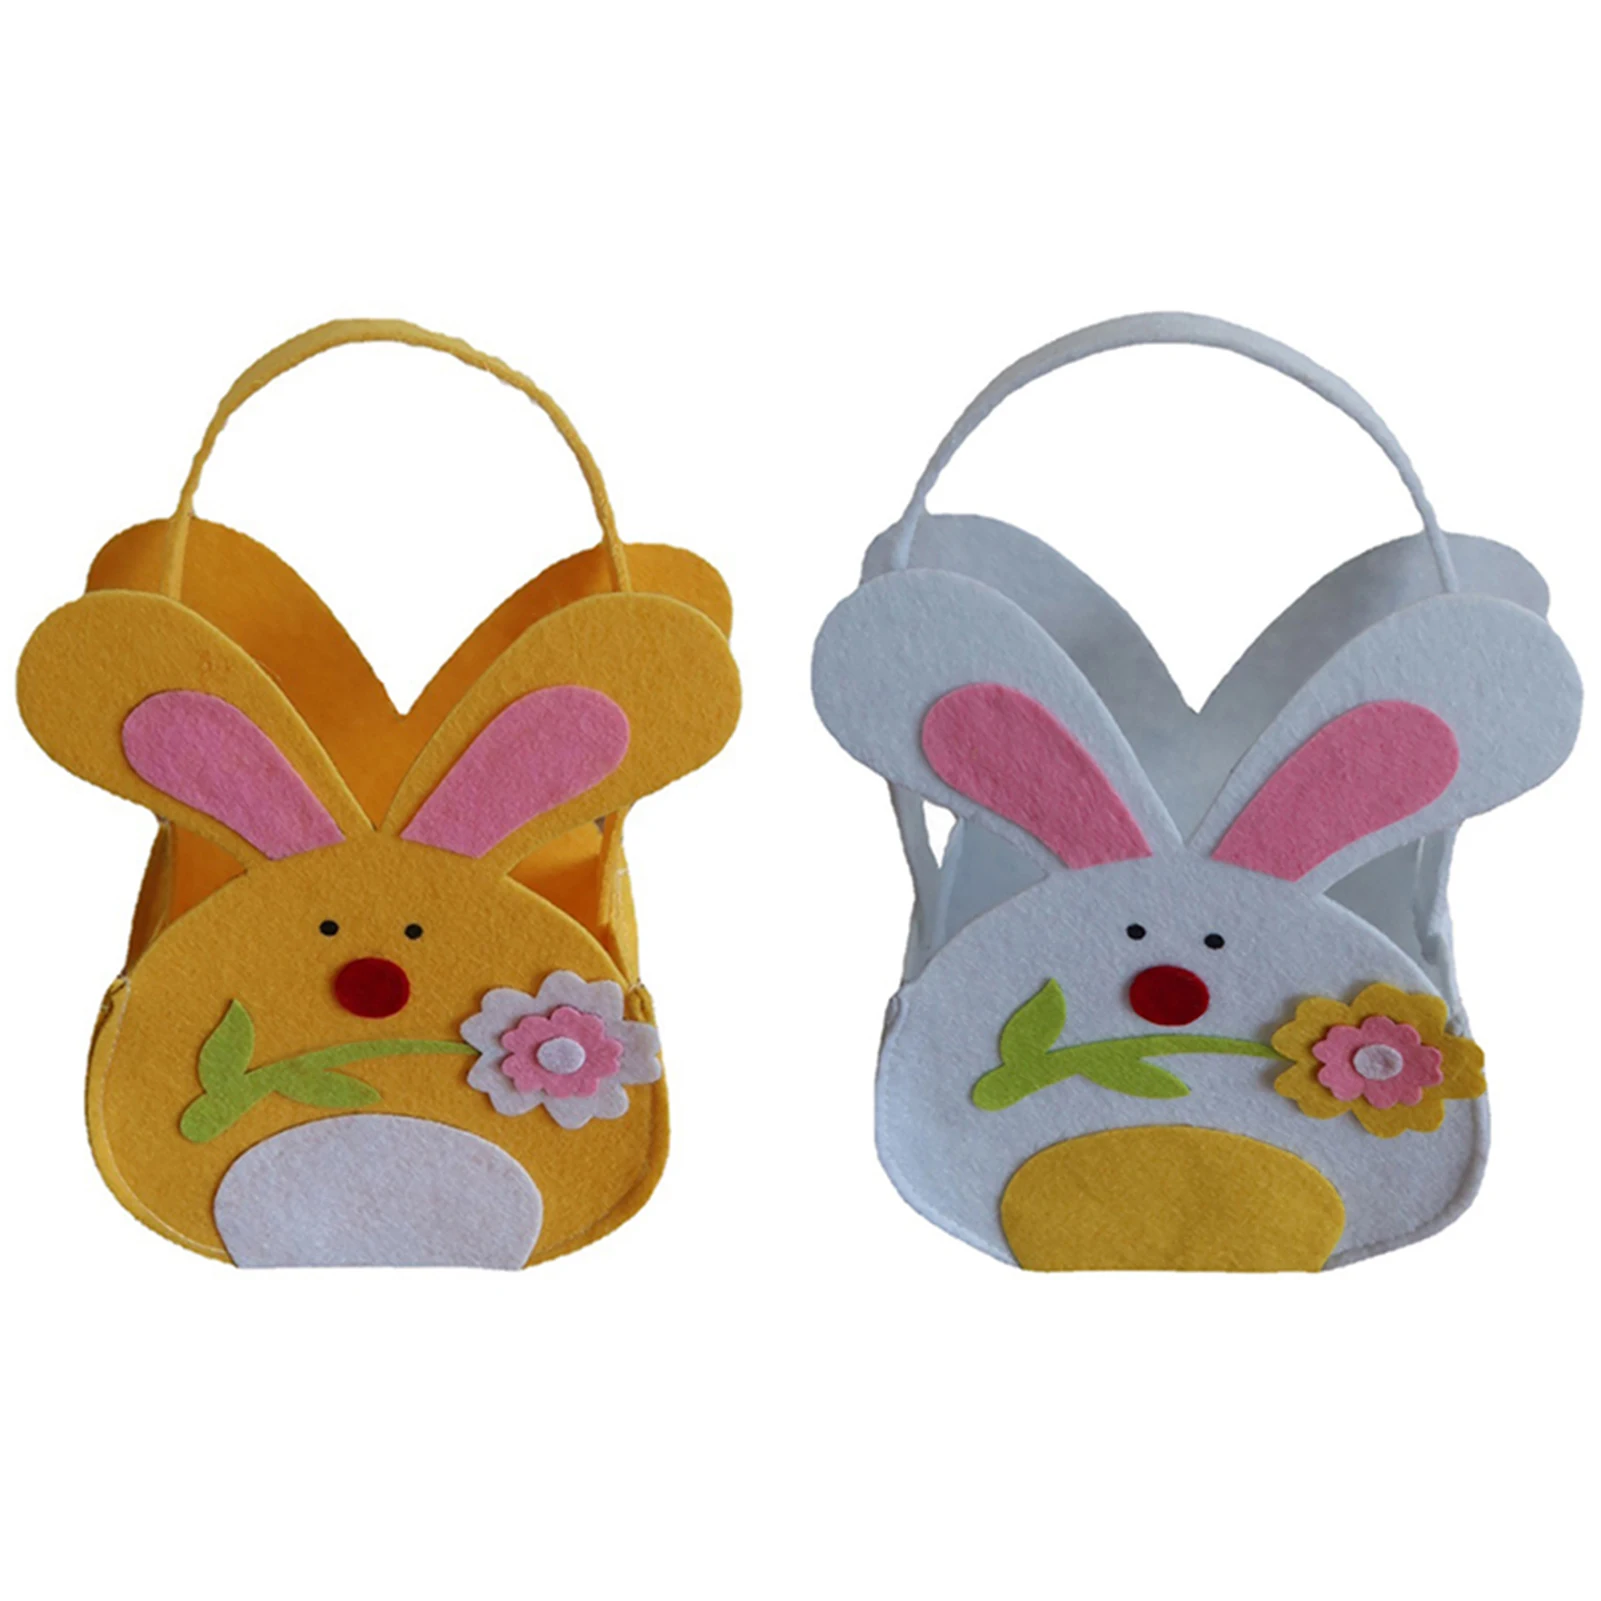 

Easter Baskets Non-Woven Treat Bags Egg Hunt Bags Easter Gift Bag Carry Basket For Kids Children MC889